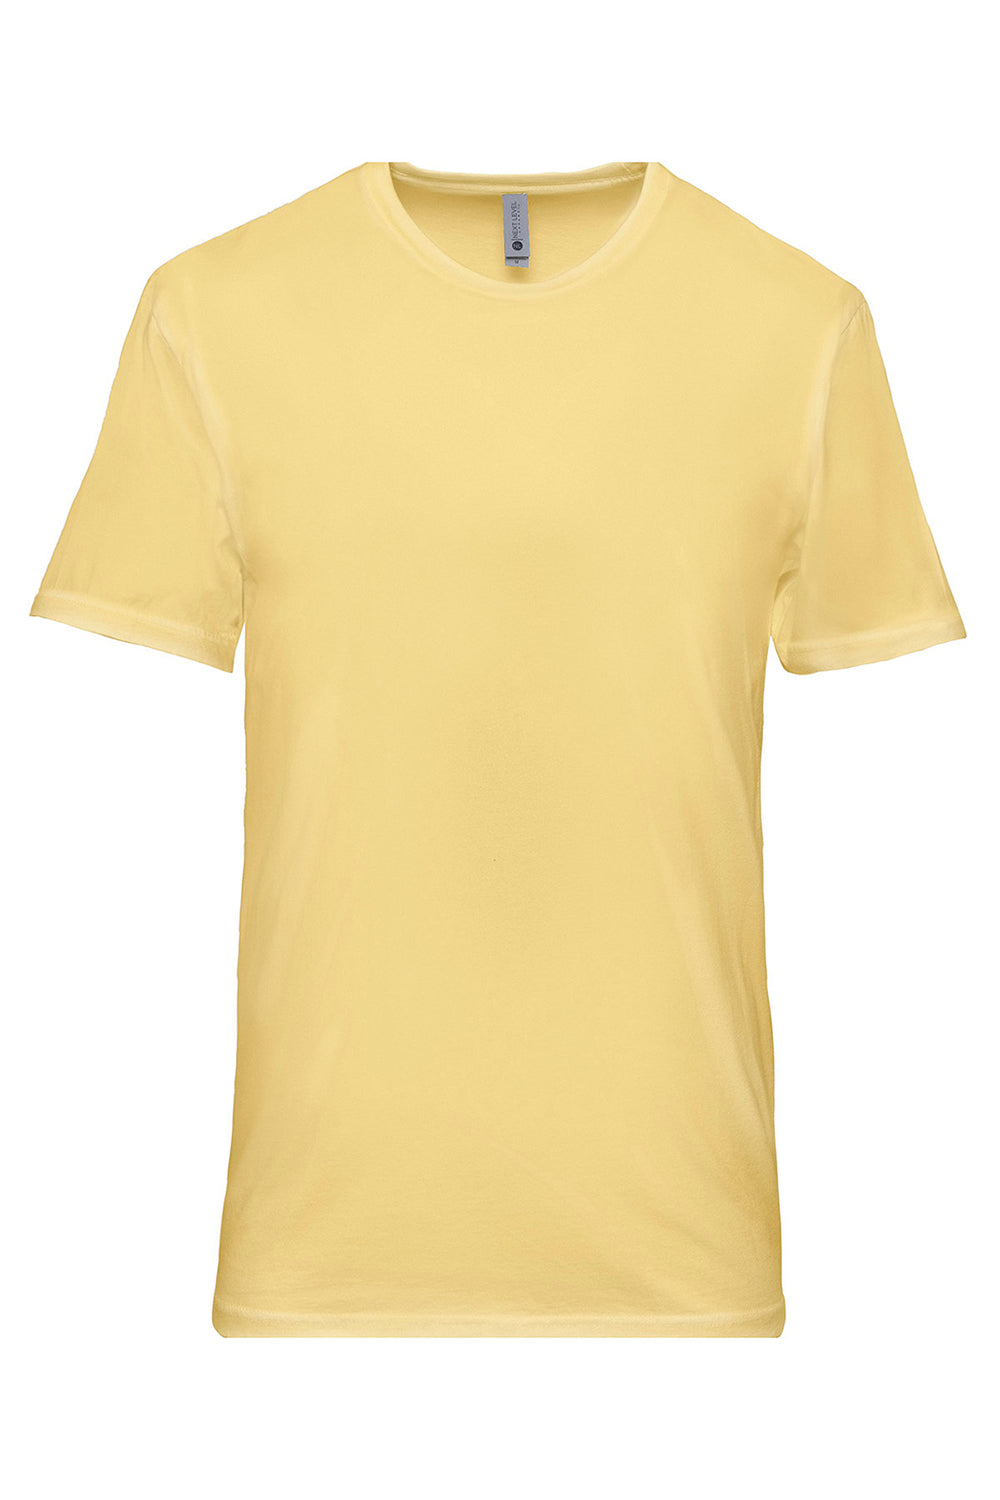 Next Level 3600SW Mens Soft Wash Short Sleeve Crewneck T-Shirt Banana Cream Yellow Flat Front